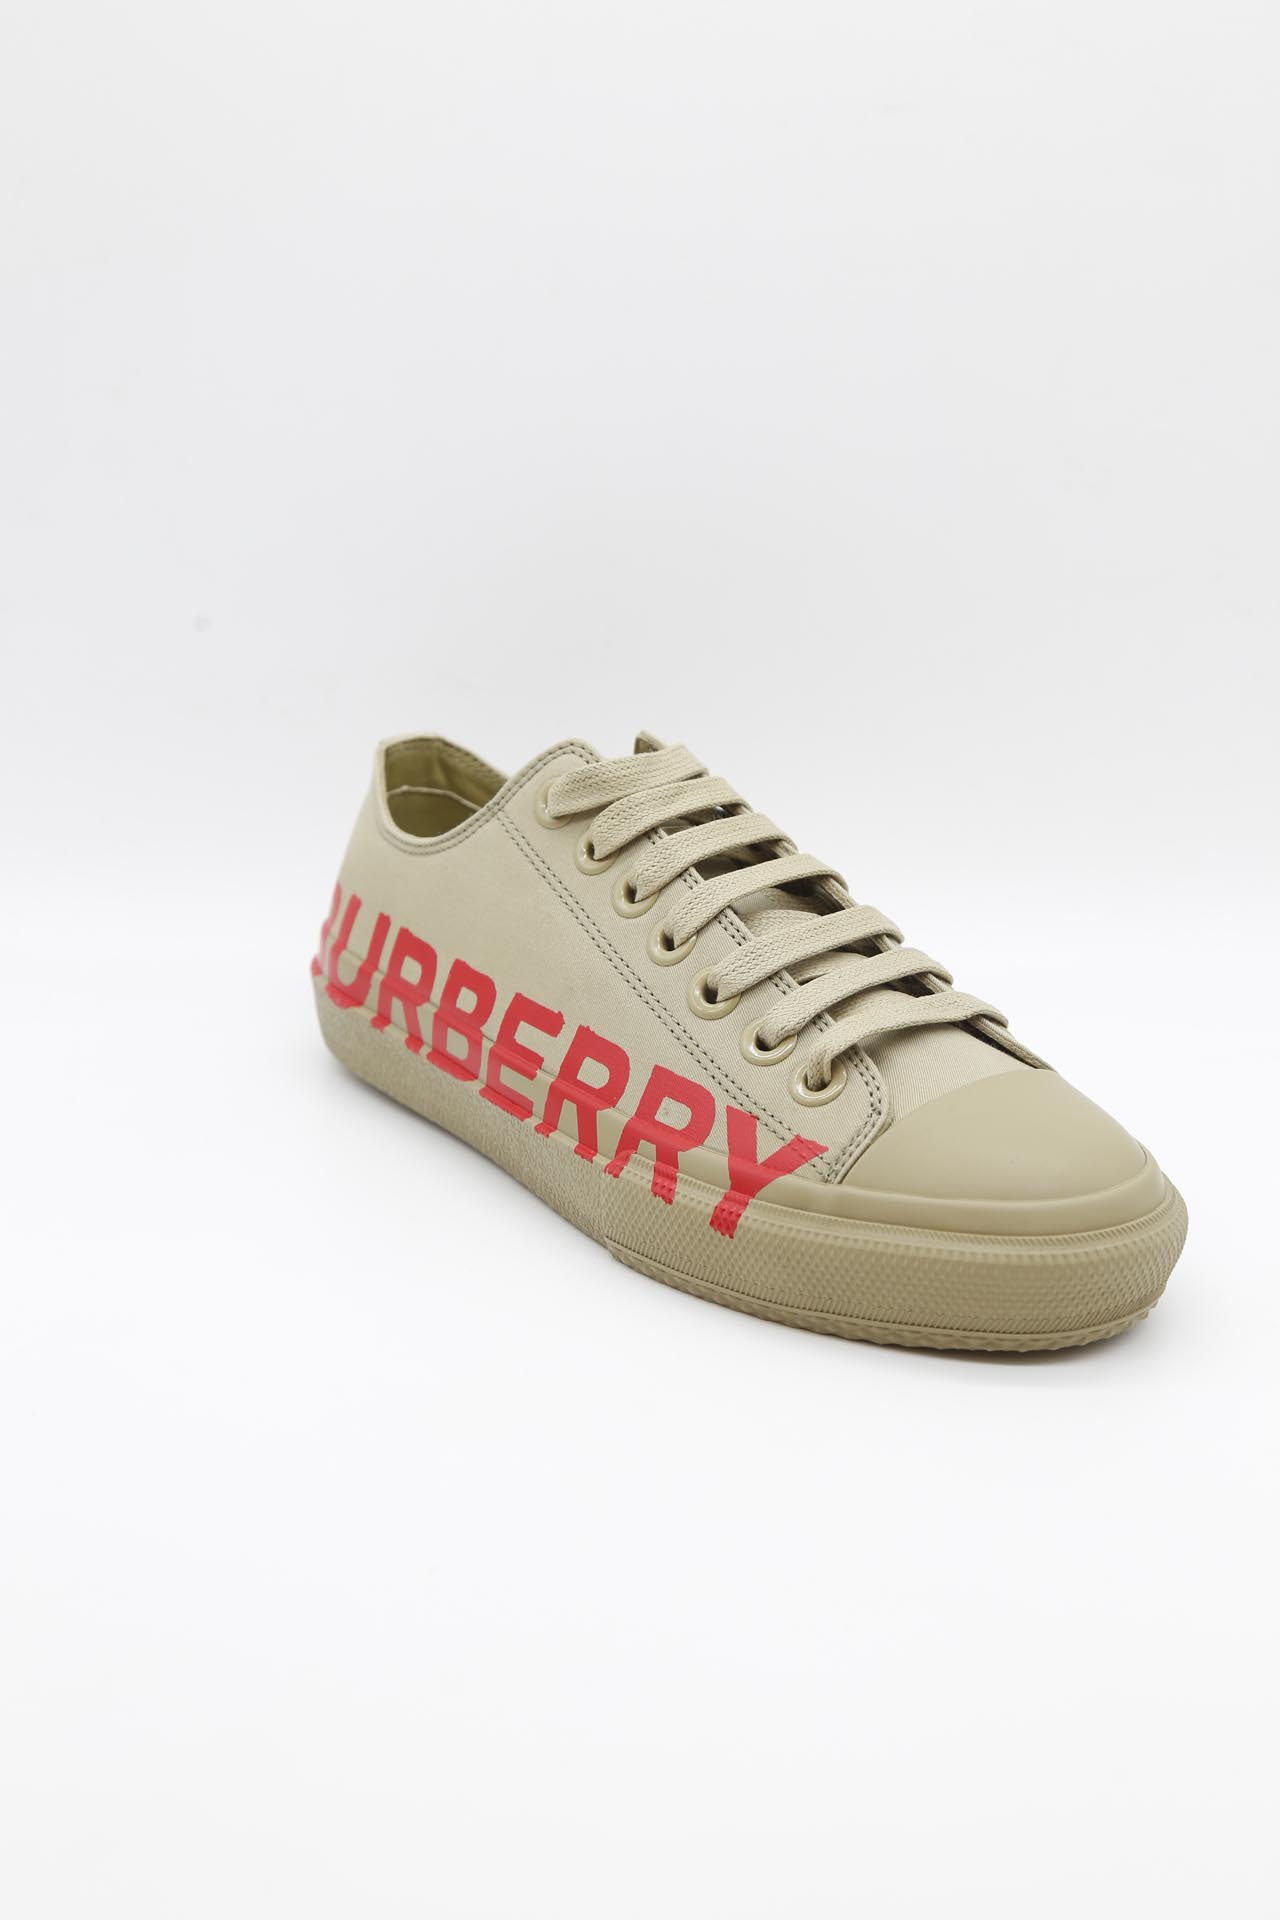 Burberry, Sneakers